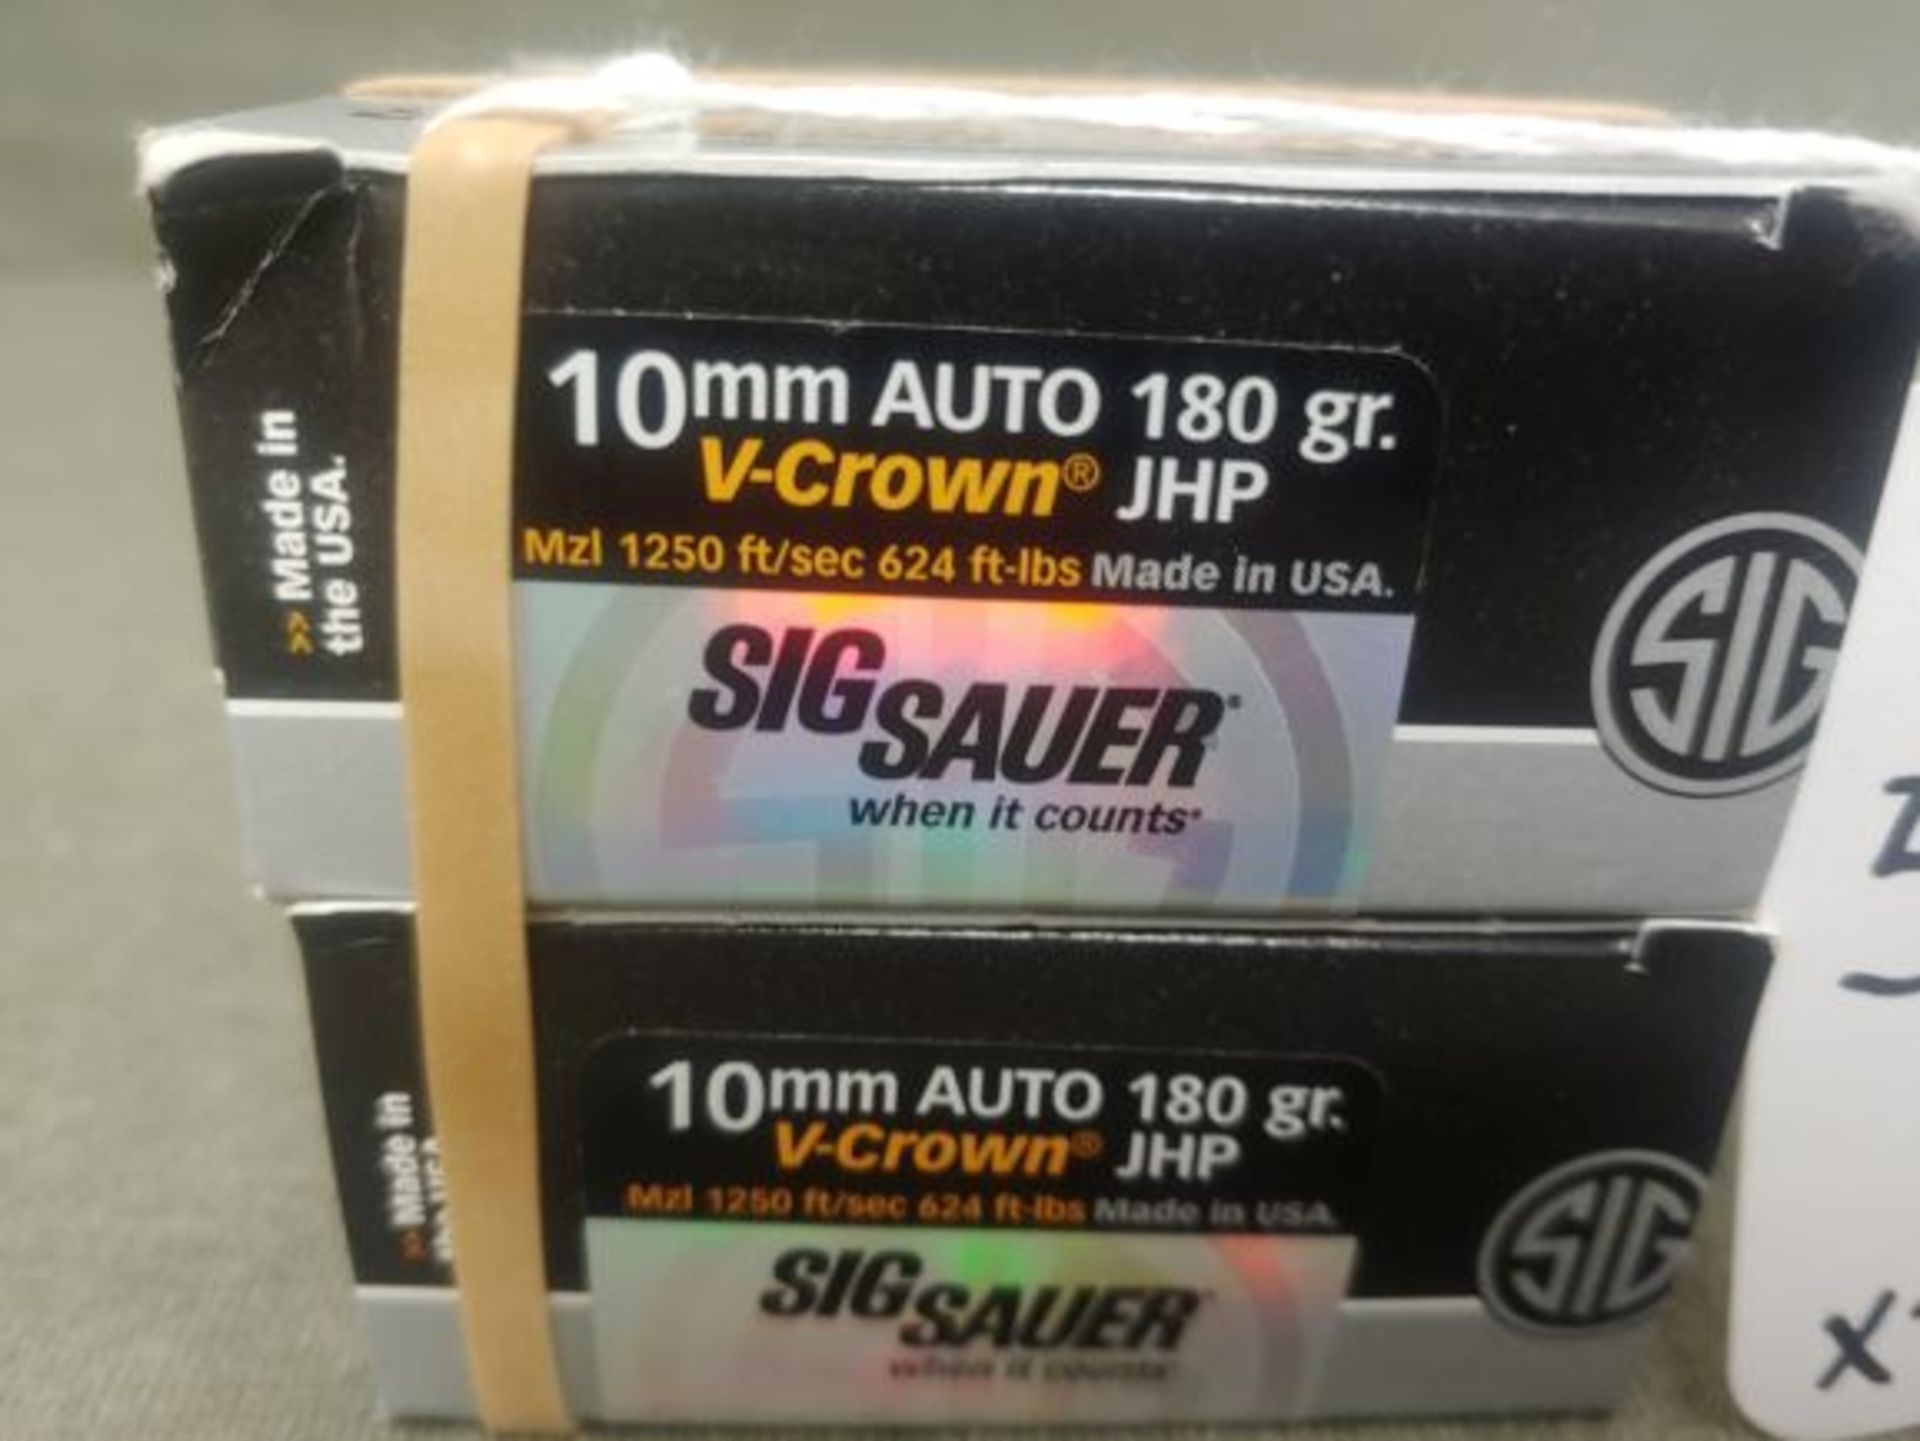 542. Sig Sauer Elite 10mm Auto 180gr. JHP, 20 Rnd. Boxes (2x the Money) - Image 2 of 2